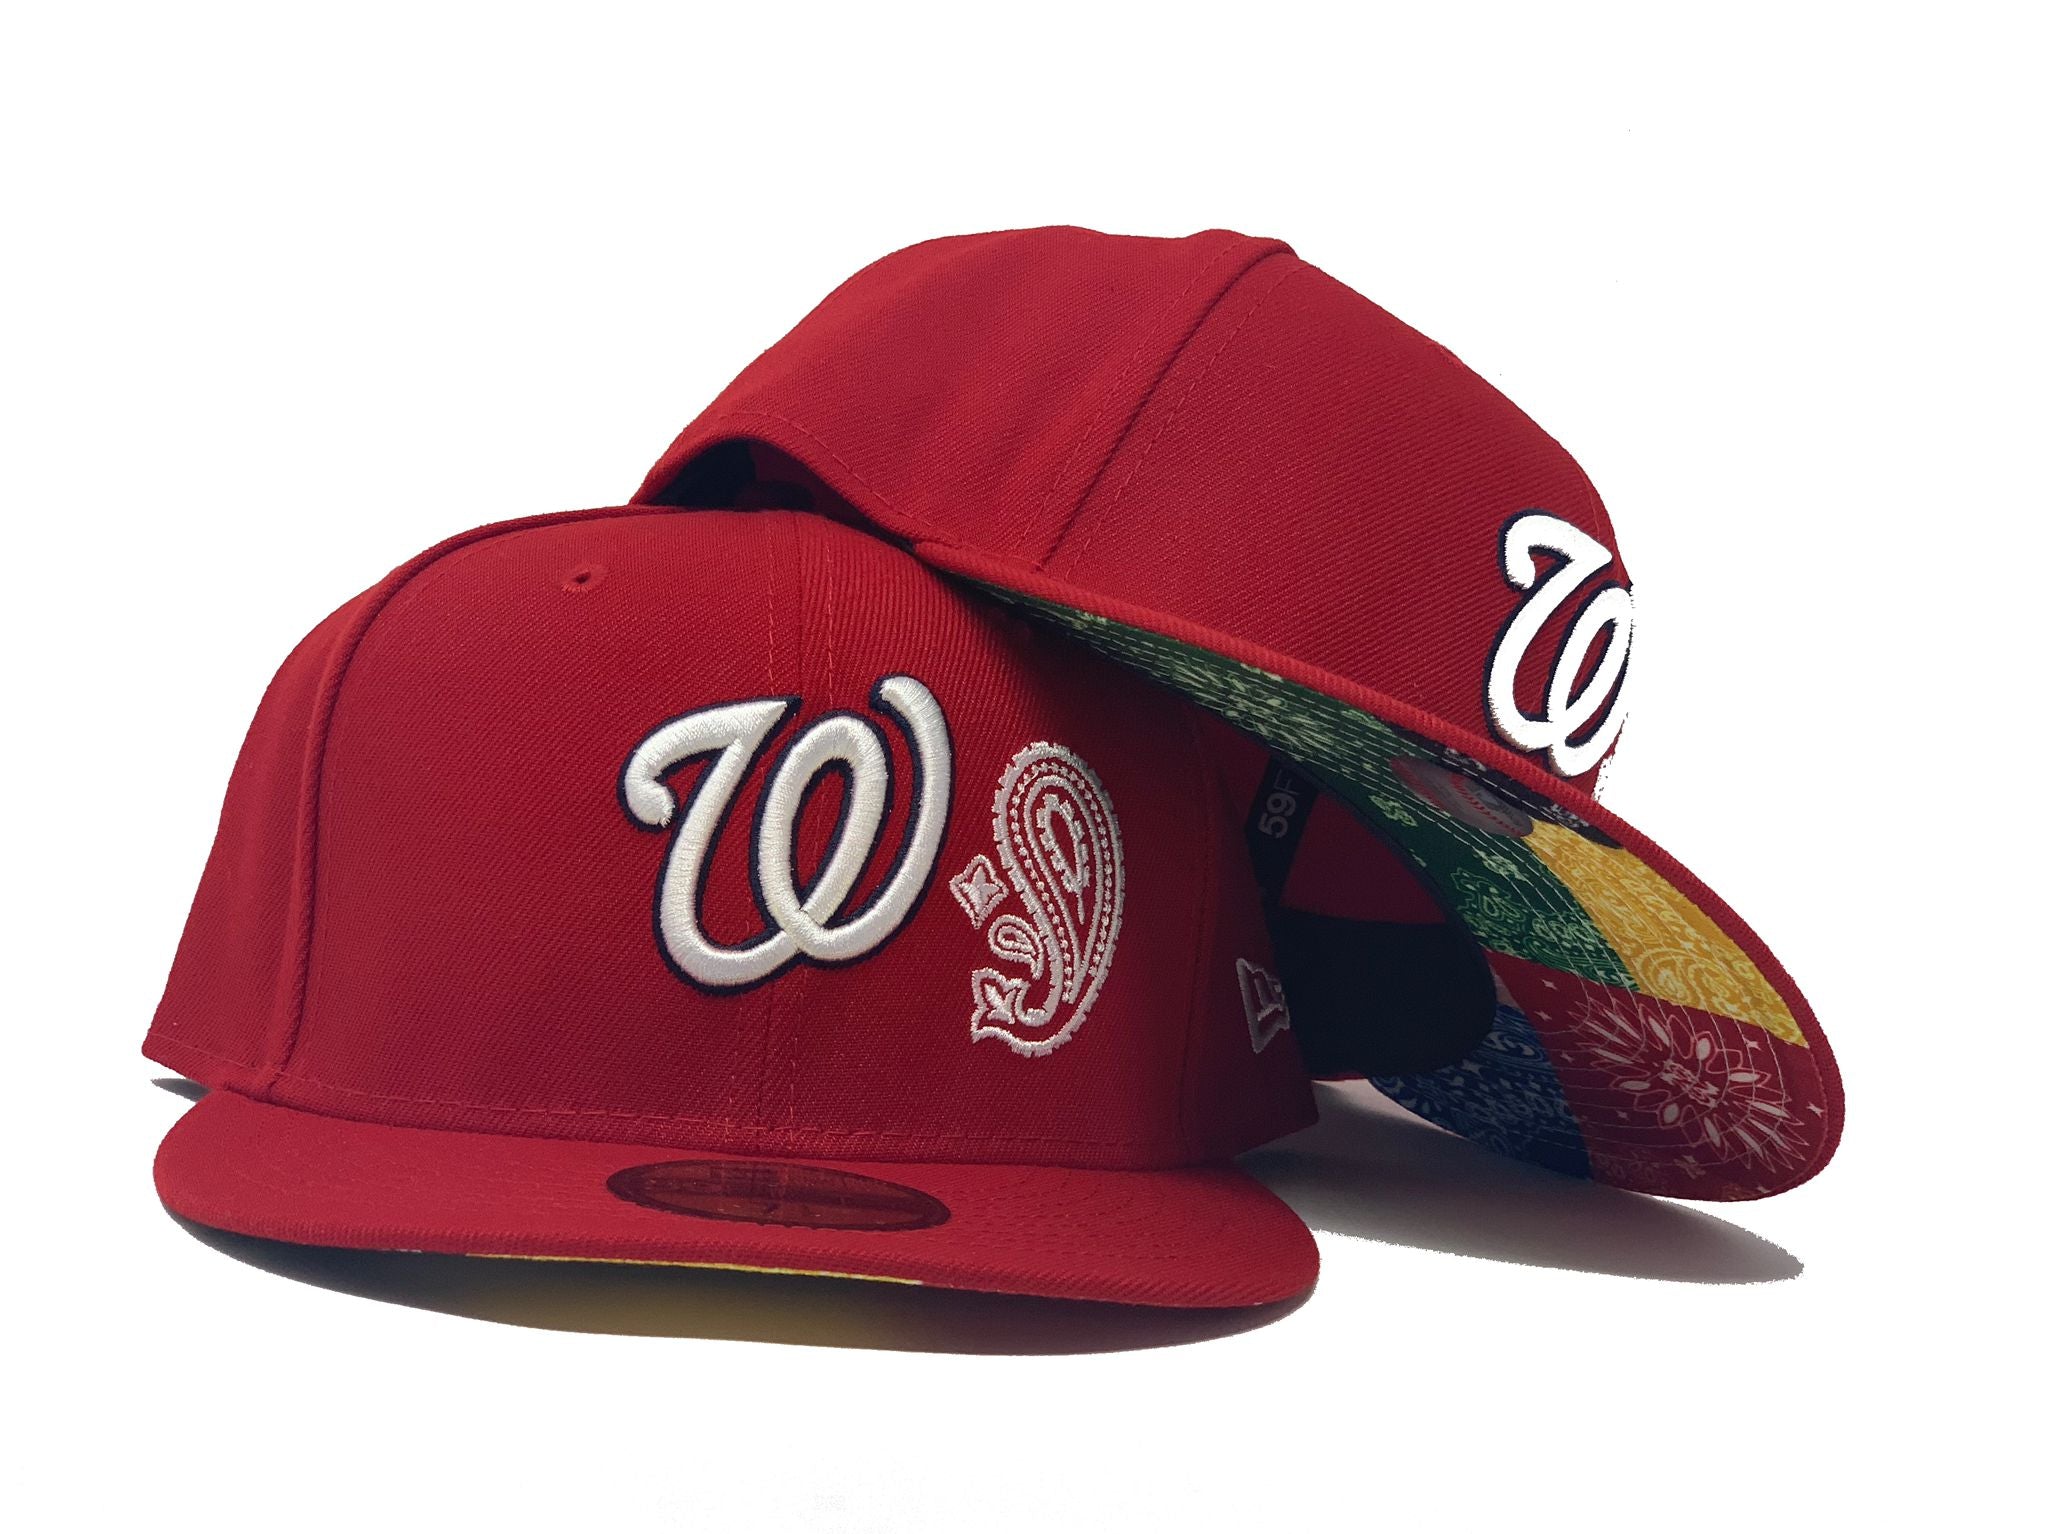 New Era, Accessories, Washington Nationals Baseball Cap